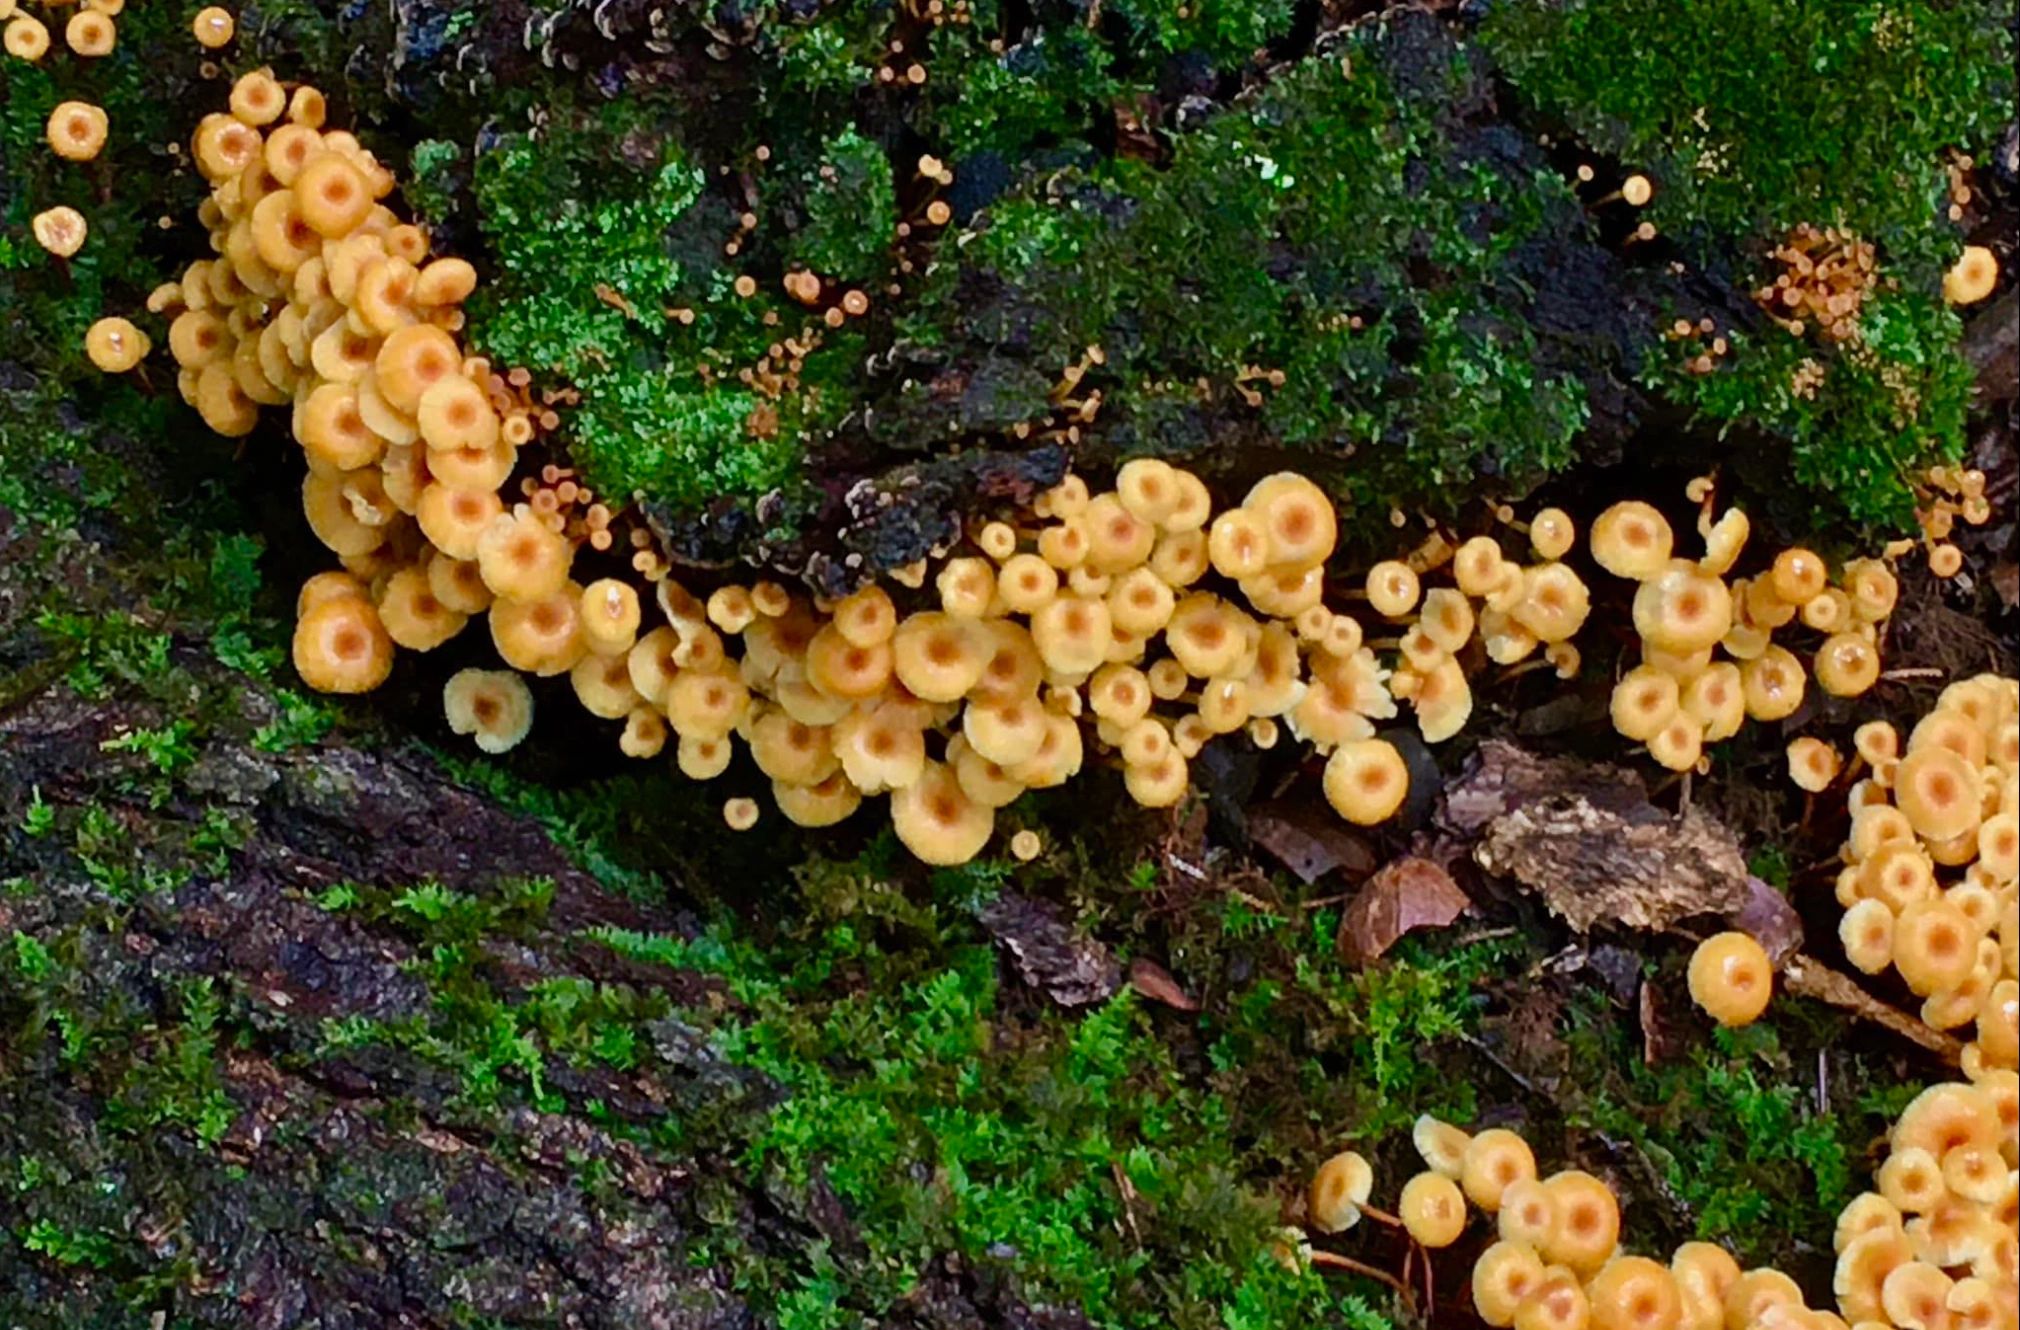 Tiny mushroom stream growing in moss